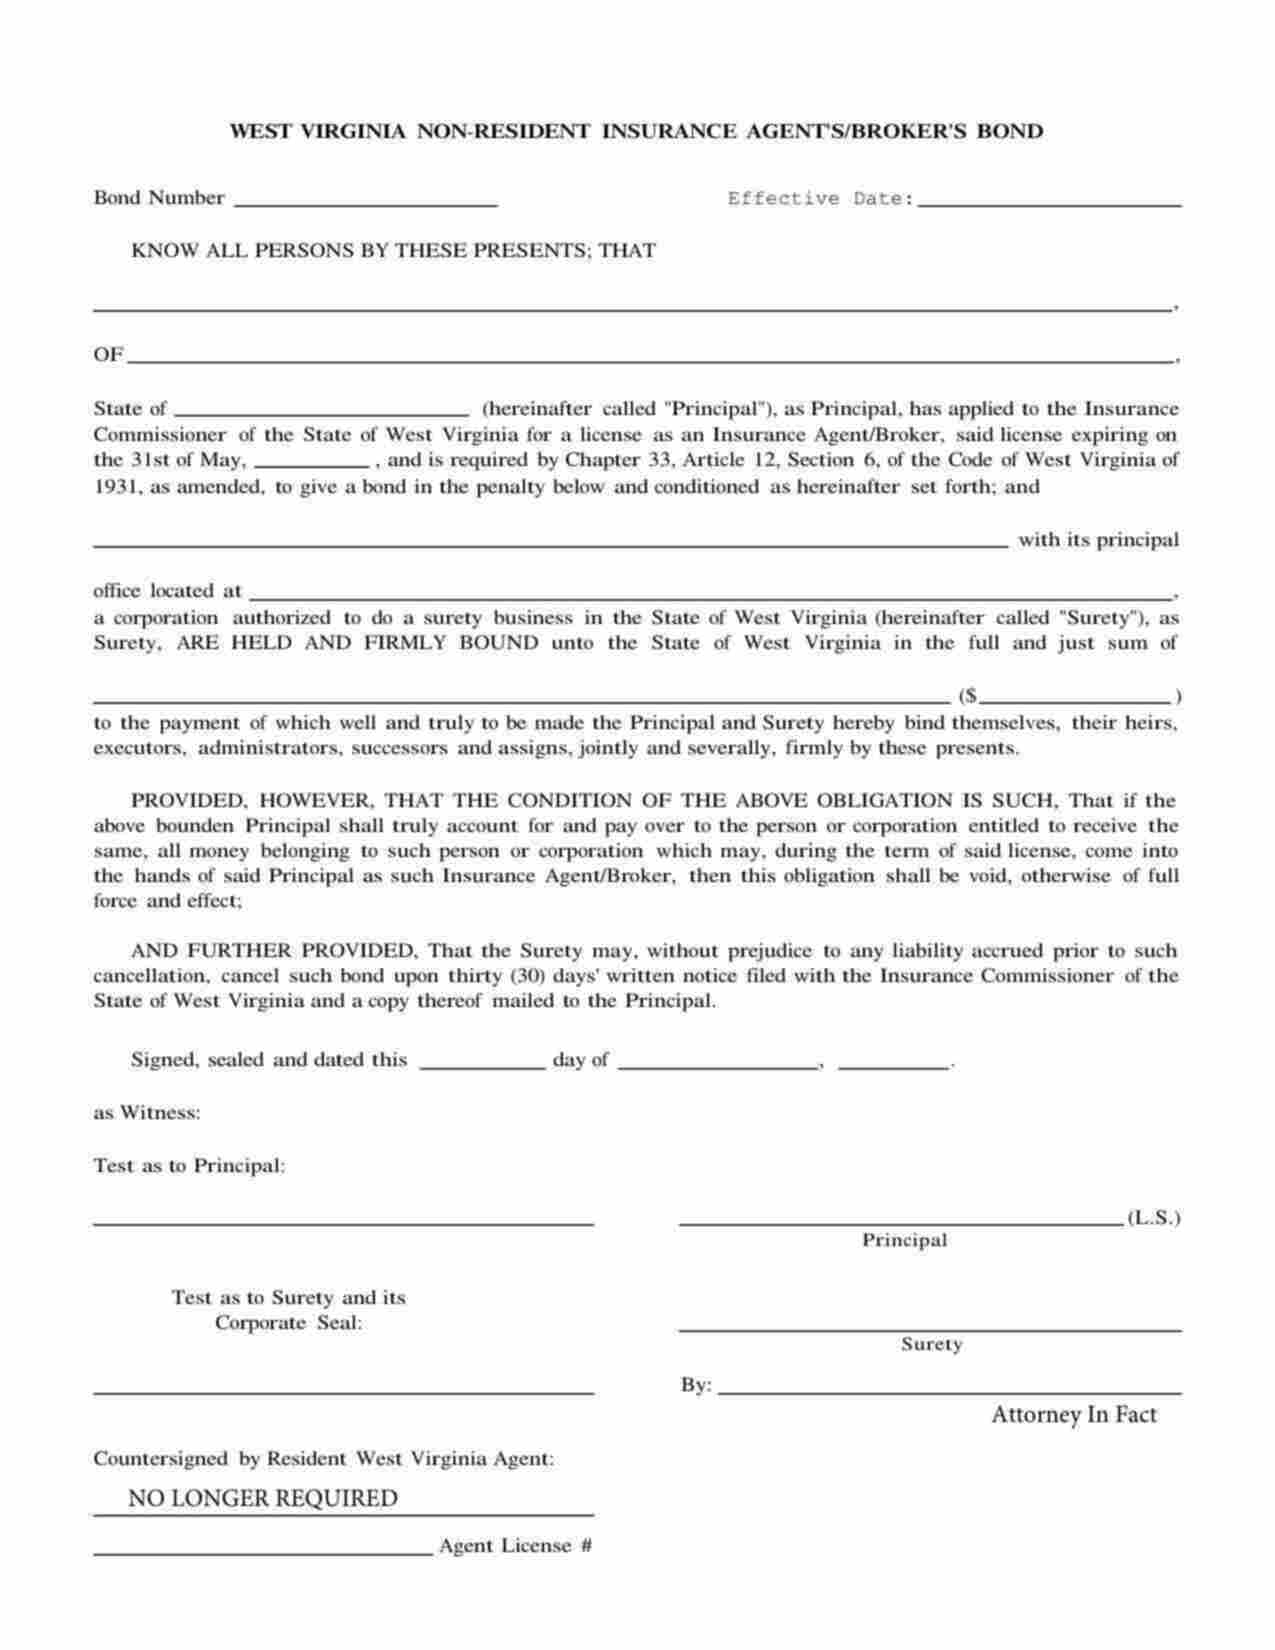 West Virginia Non-Resident Insurance Agent/Broker Bond Form